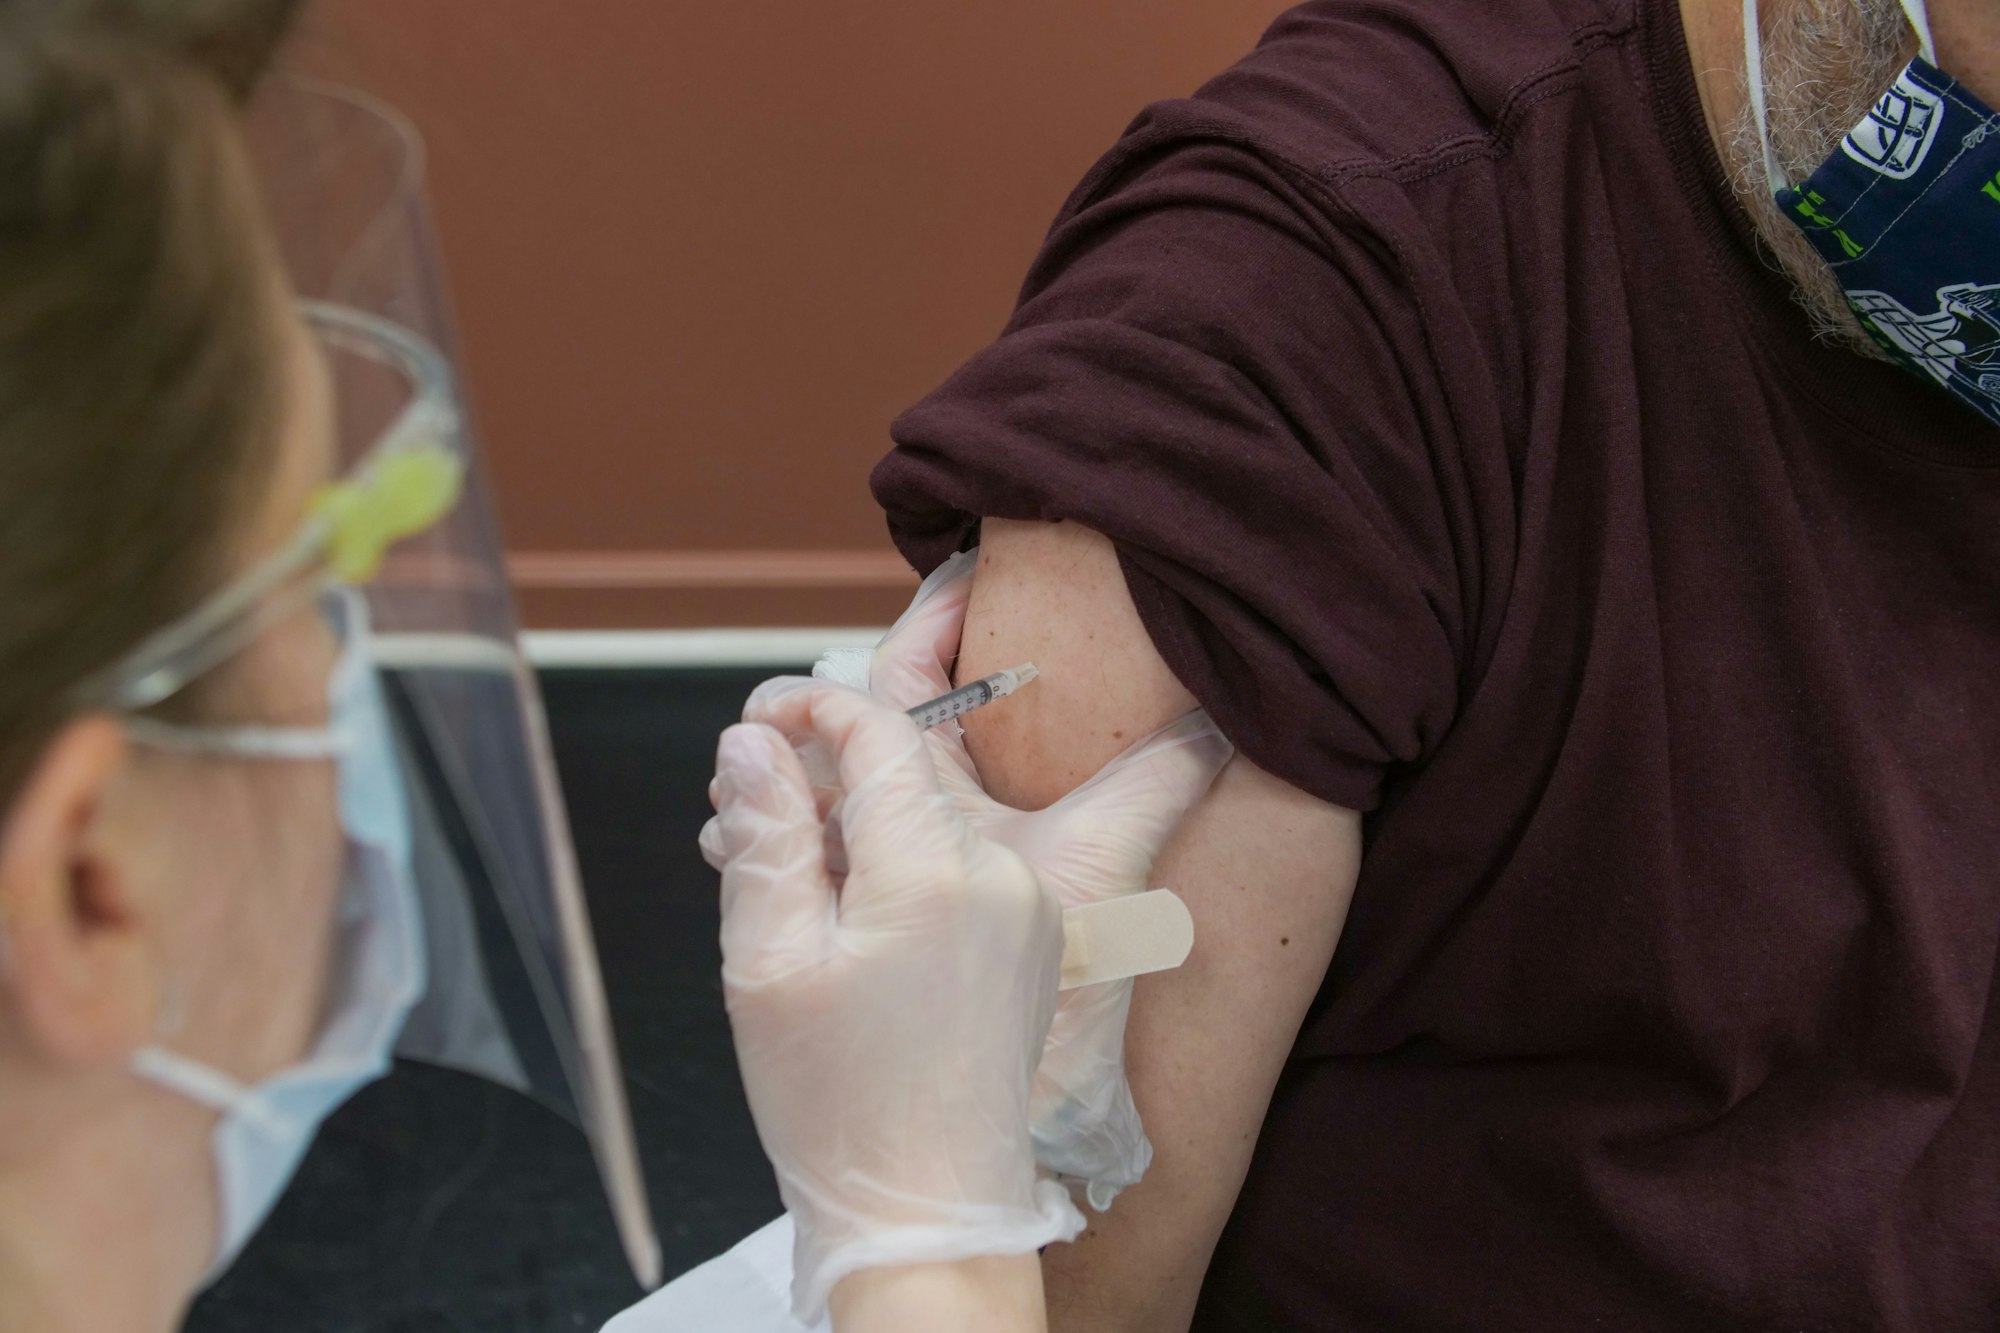 Patient receives Covid-19 vaccine shot